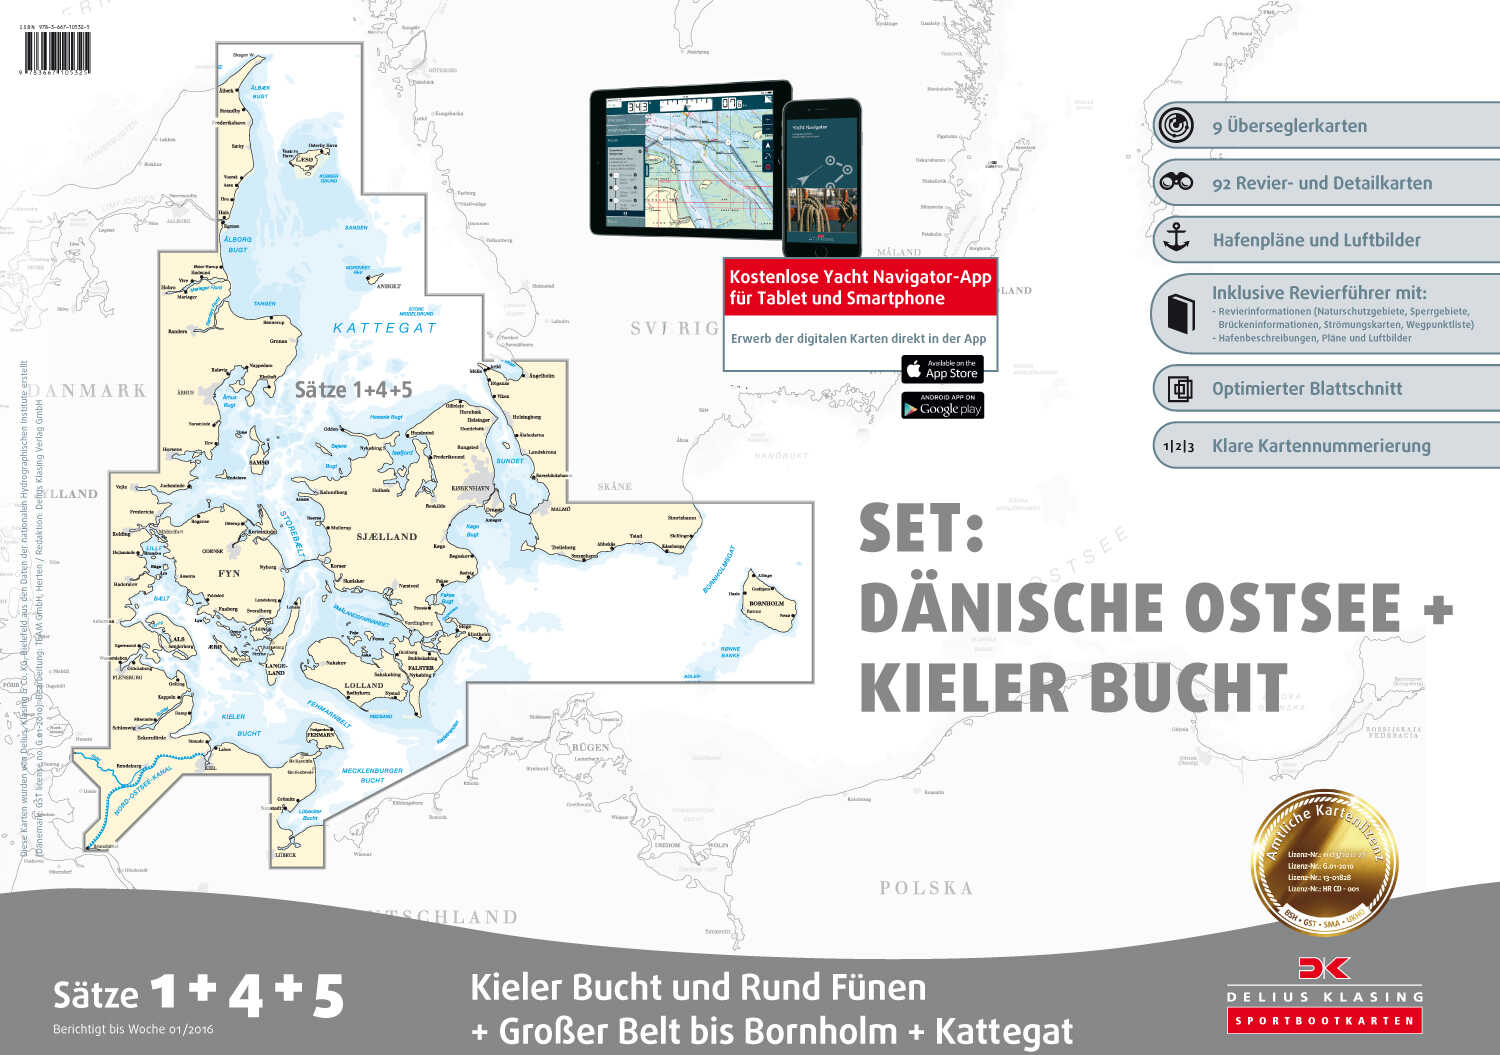 Delius Klasing Sportbootkarten Satz 1+4+5 Set: Dänische Ostsee + Kieler Bucht 